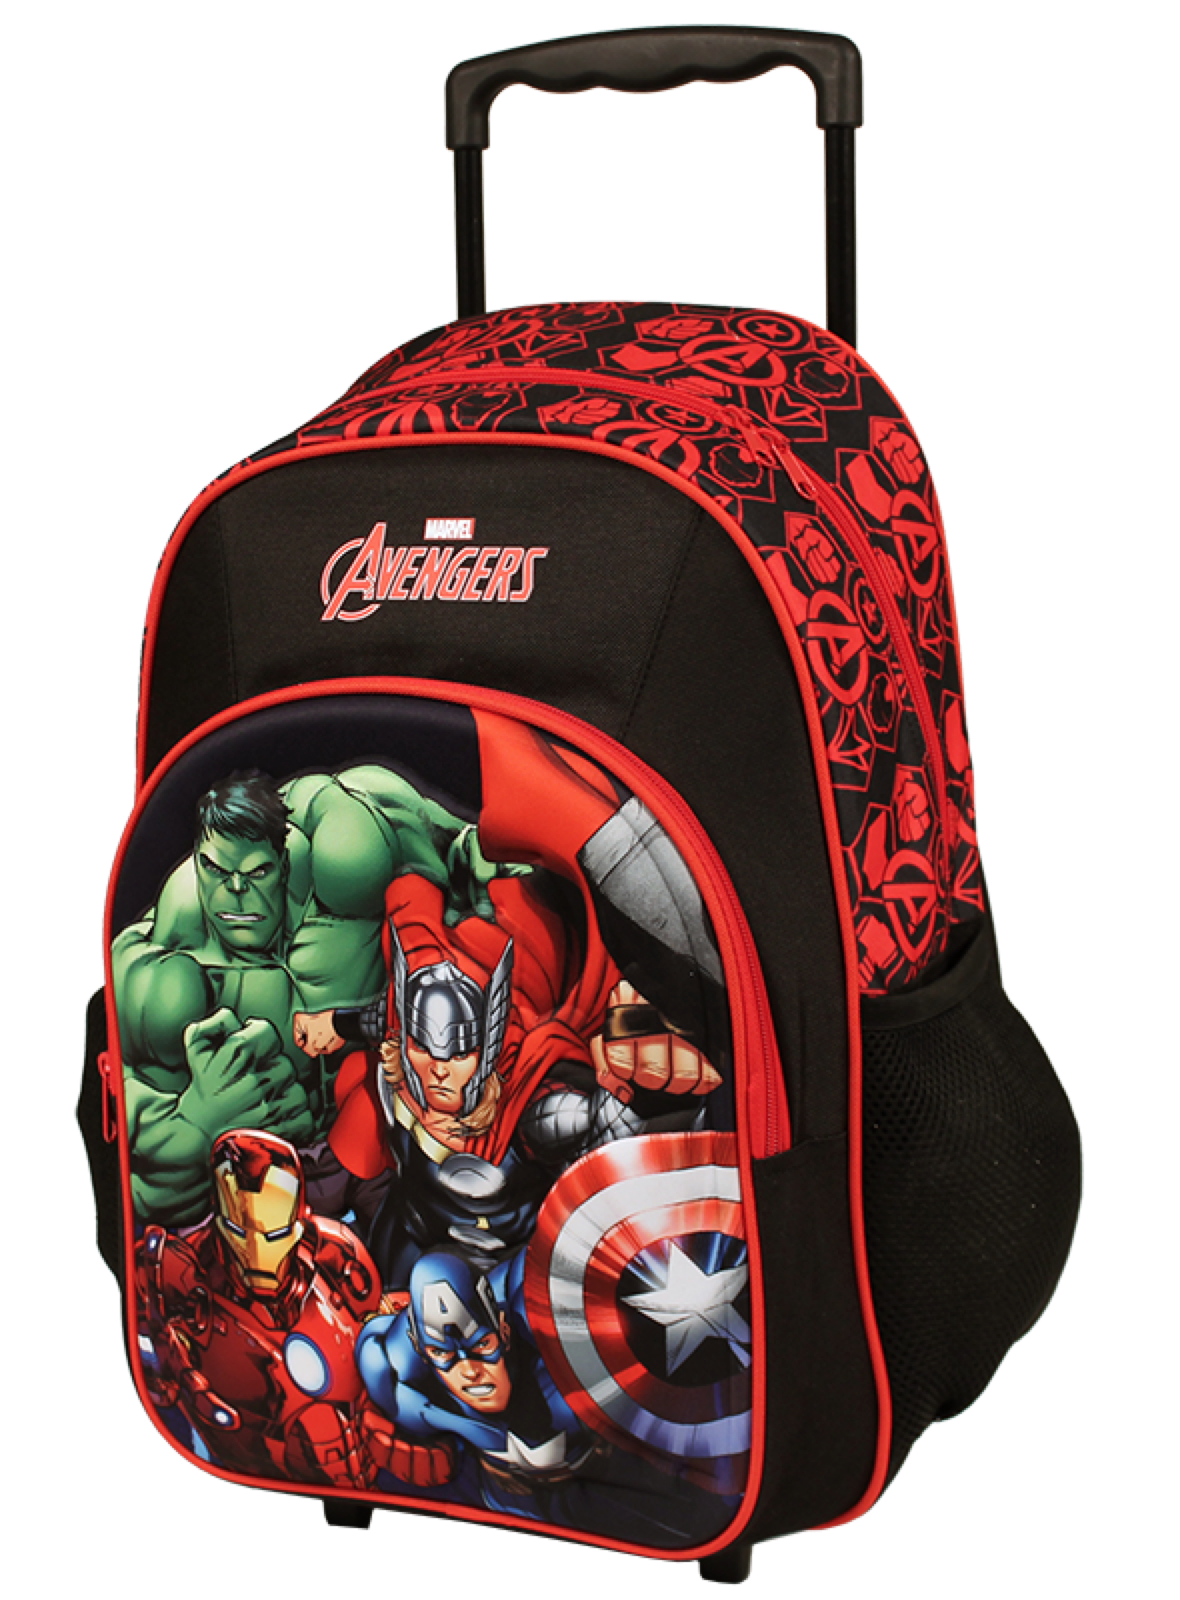 Marvel Avengers 17" Trolley Backpack by Marvel (MAR056)